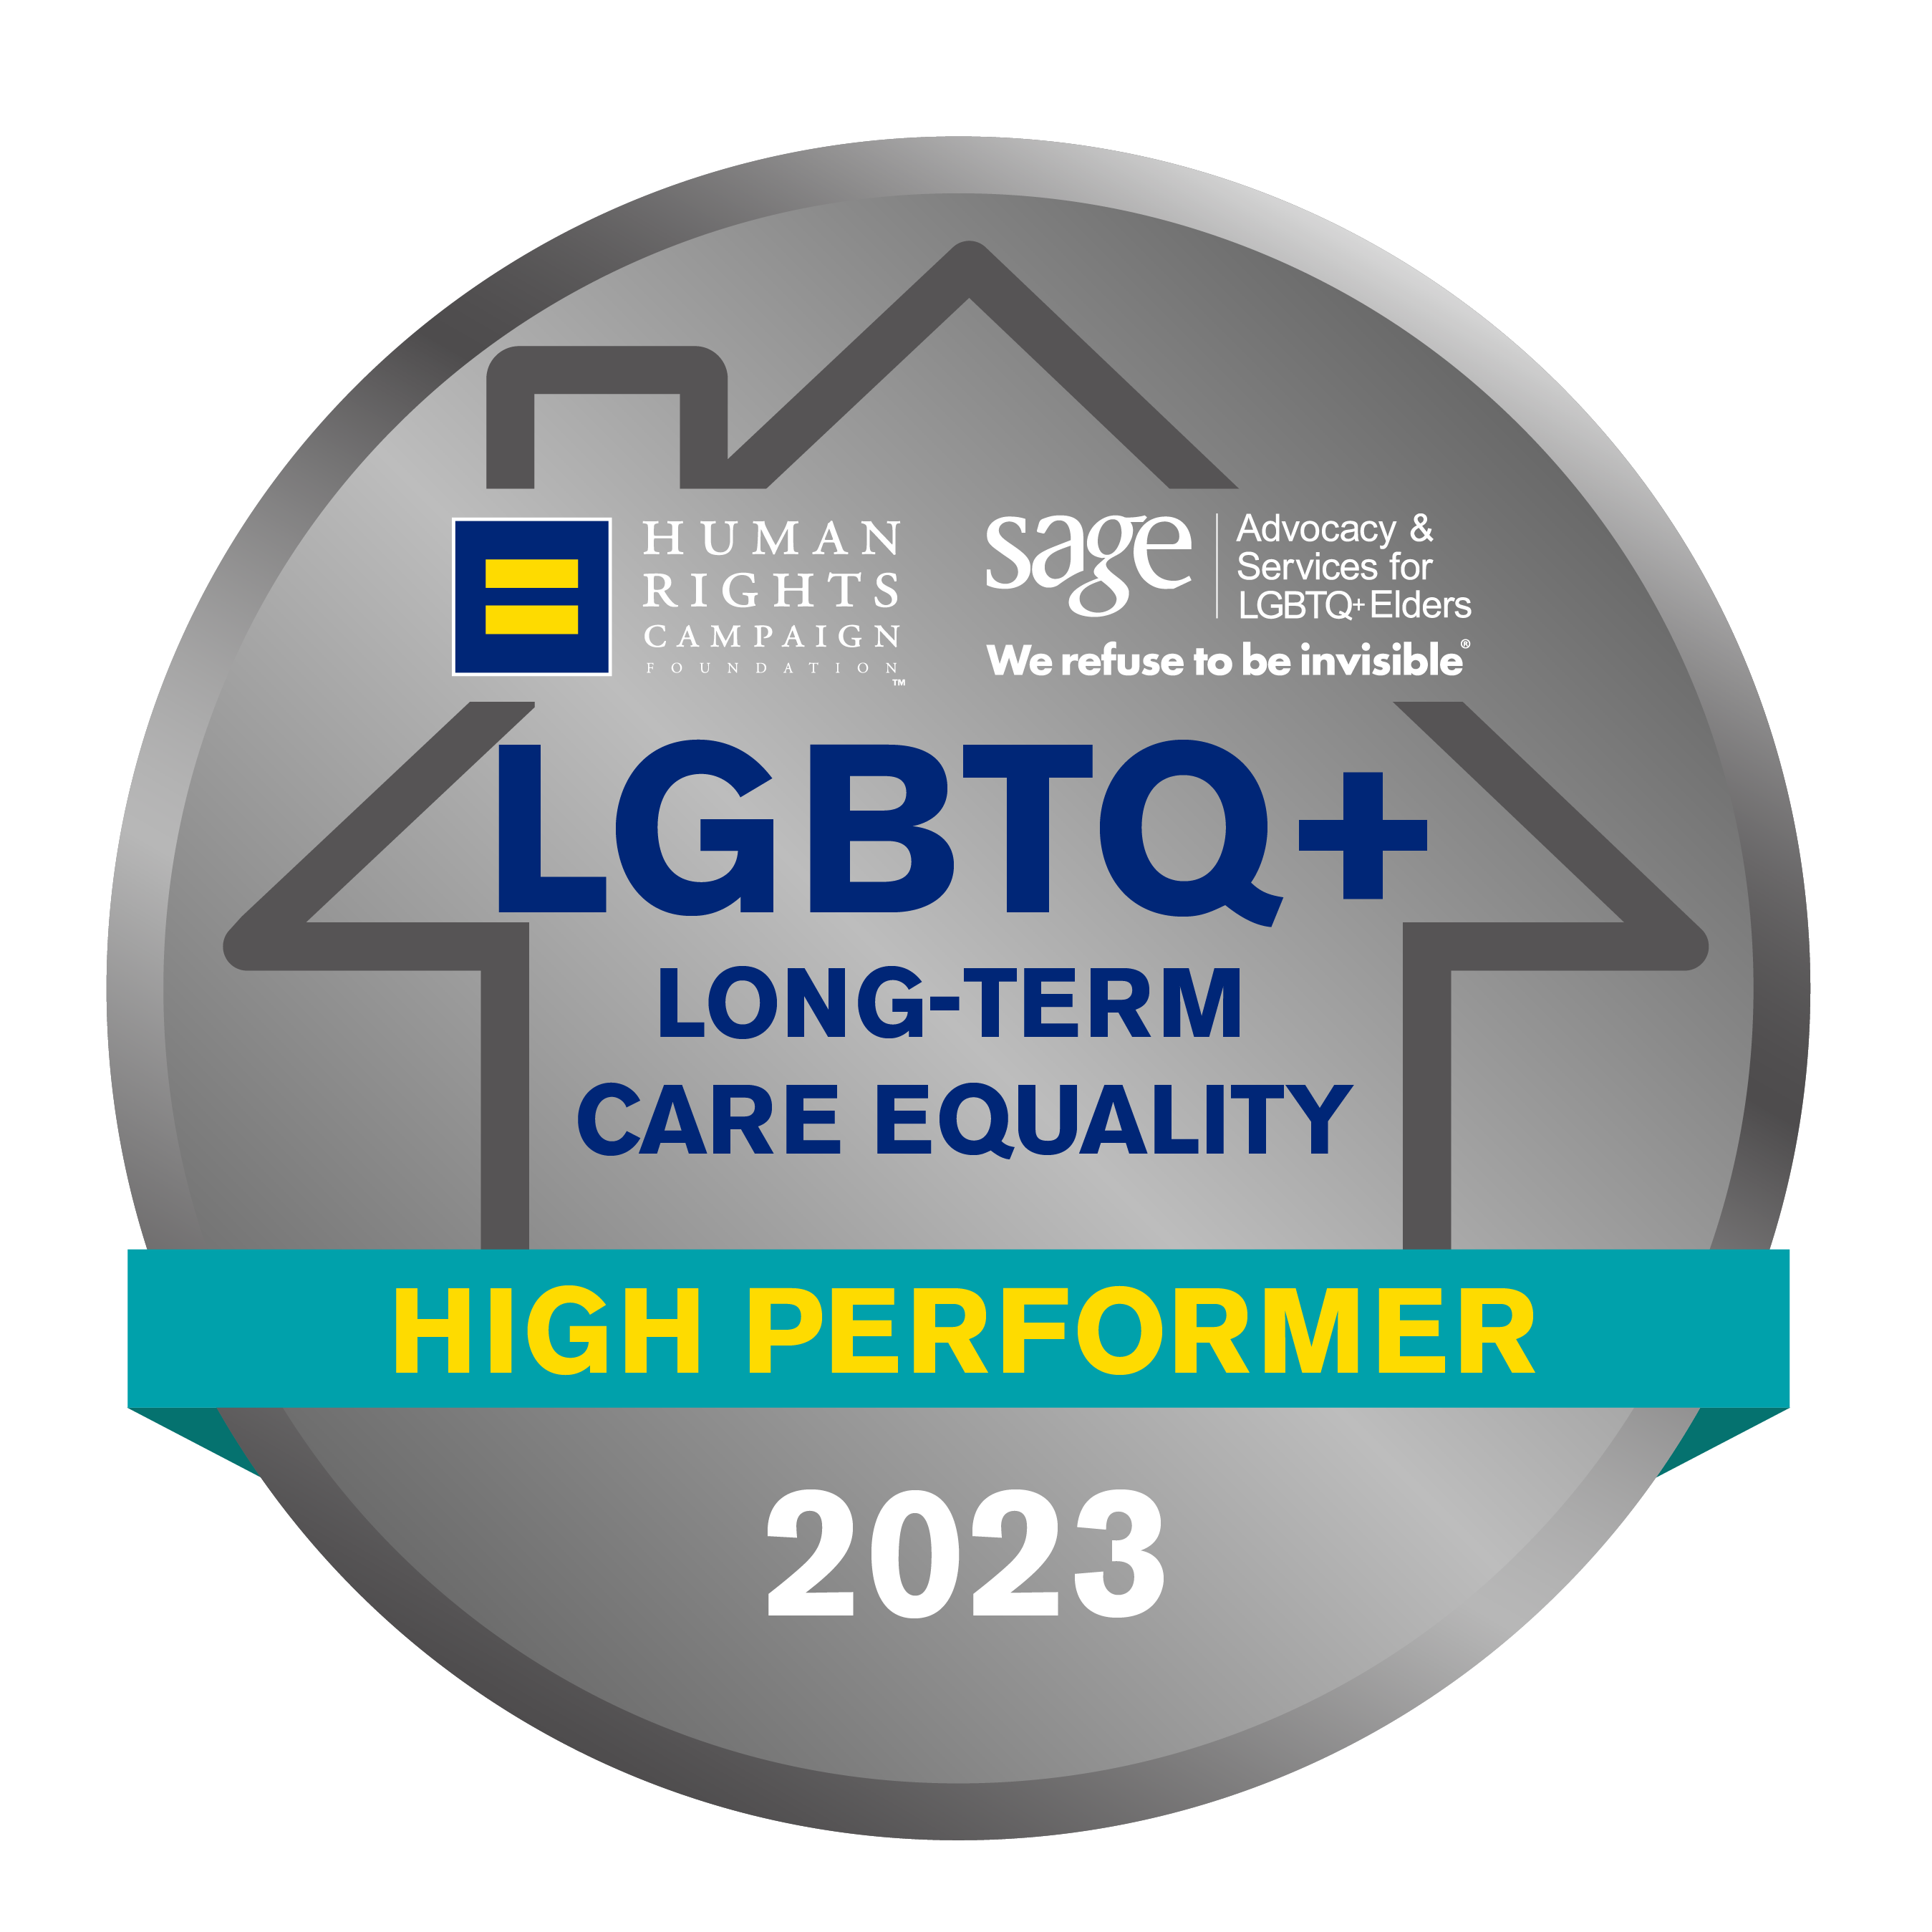 LGBTQ+ Long-Term Care Equality High Performer